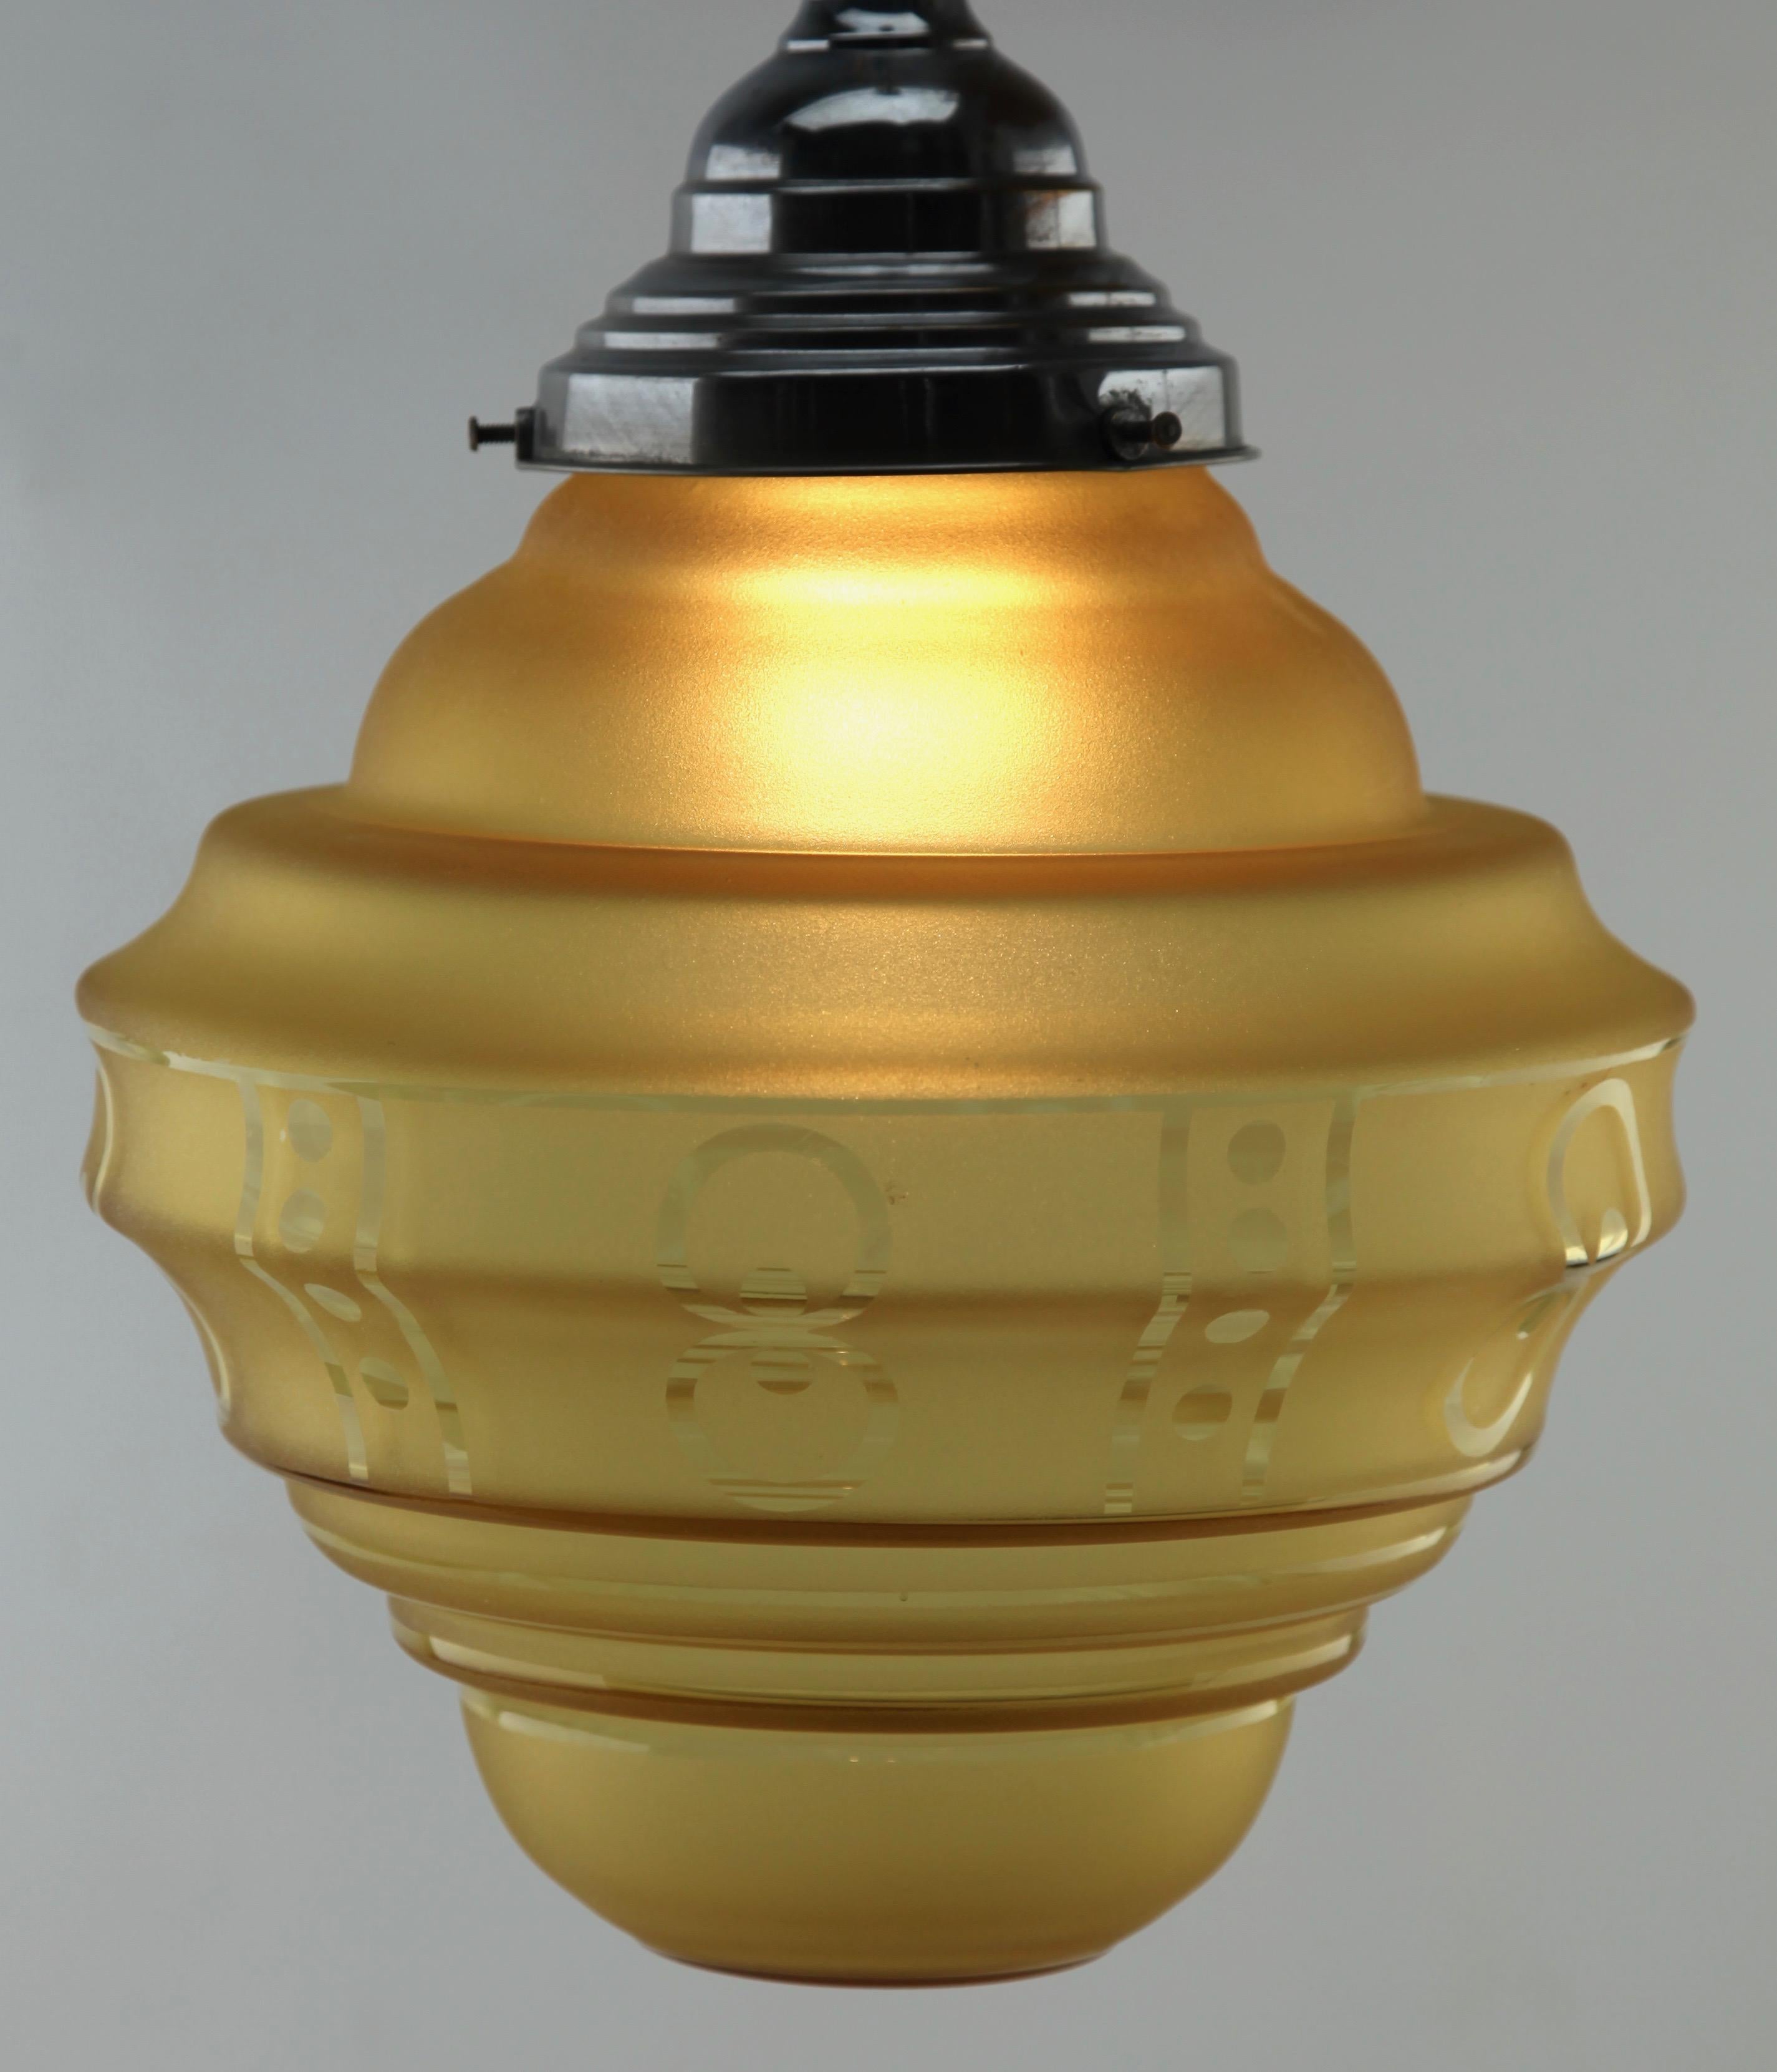 Belgian Art Deco Ceiling Lamp, Scailmont Belgium Glass Shade, 1930s For Sale